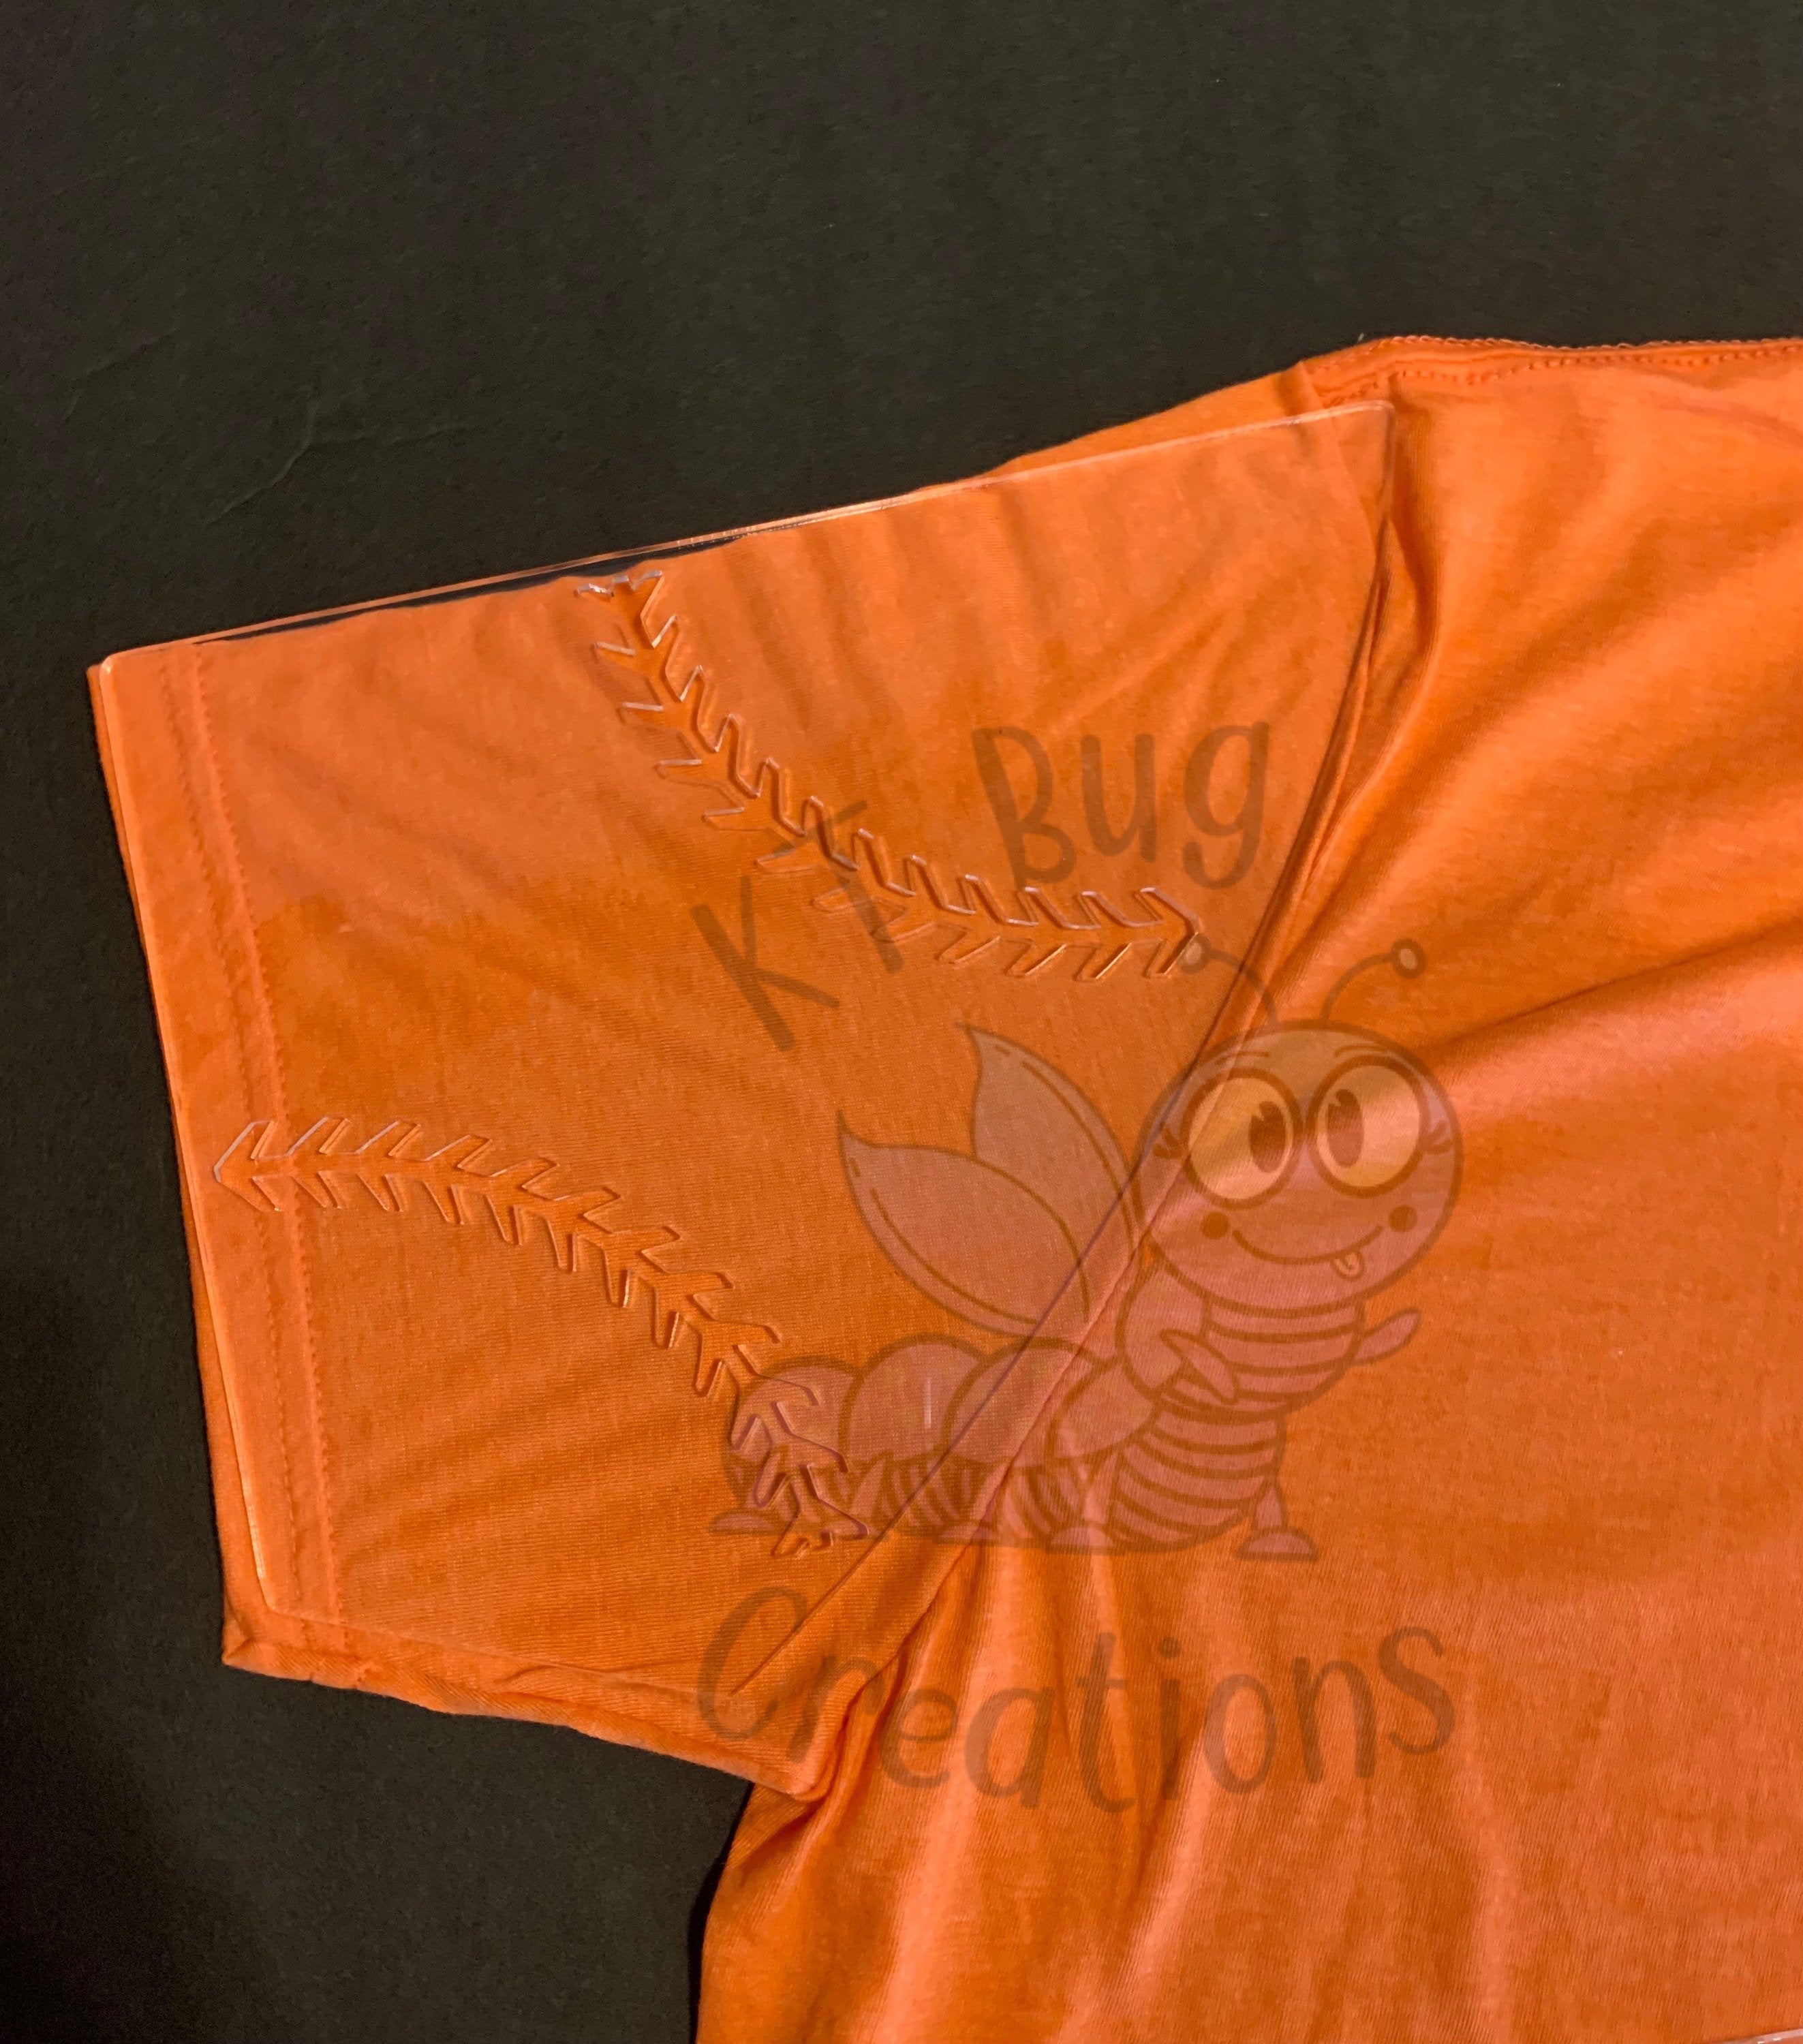 Bleached Sleeve Template for Shirt Making | Baseball Sleeve Bleach Template